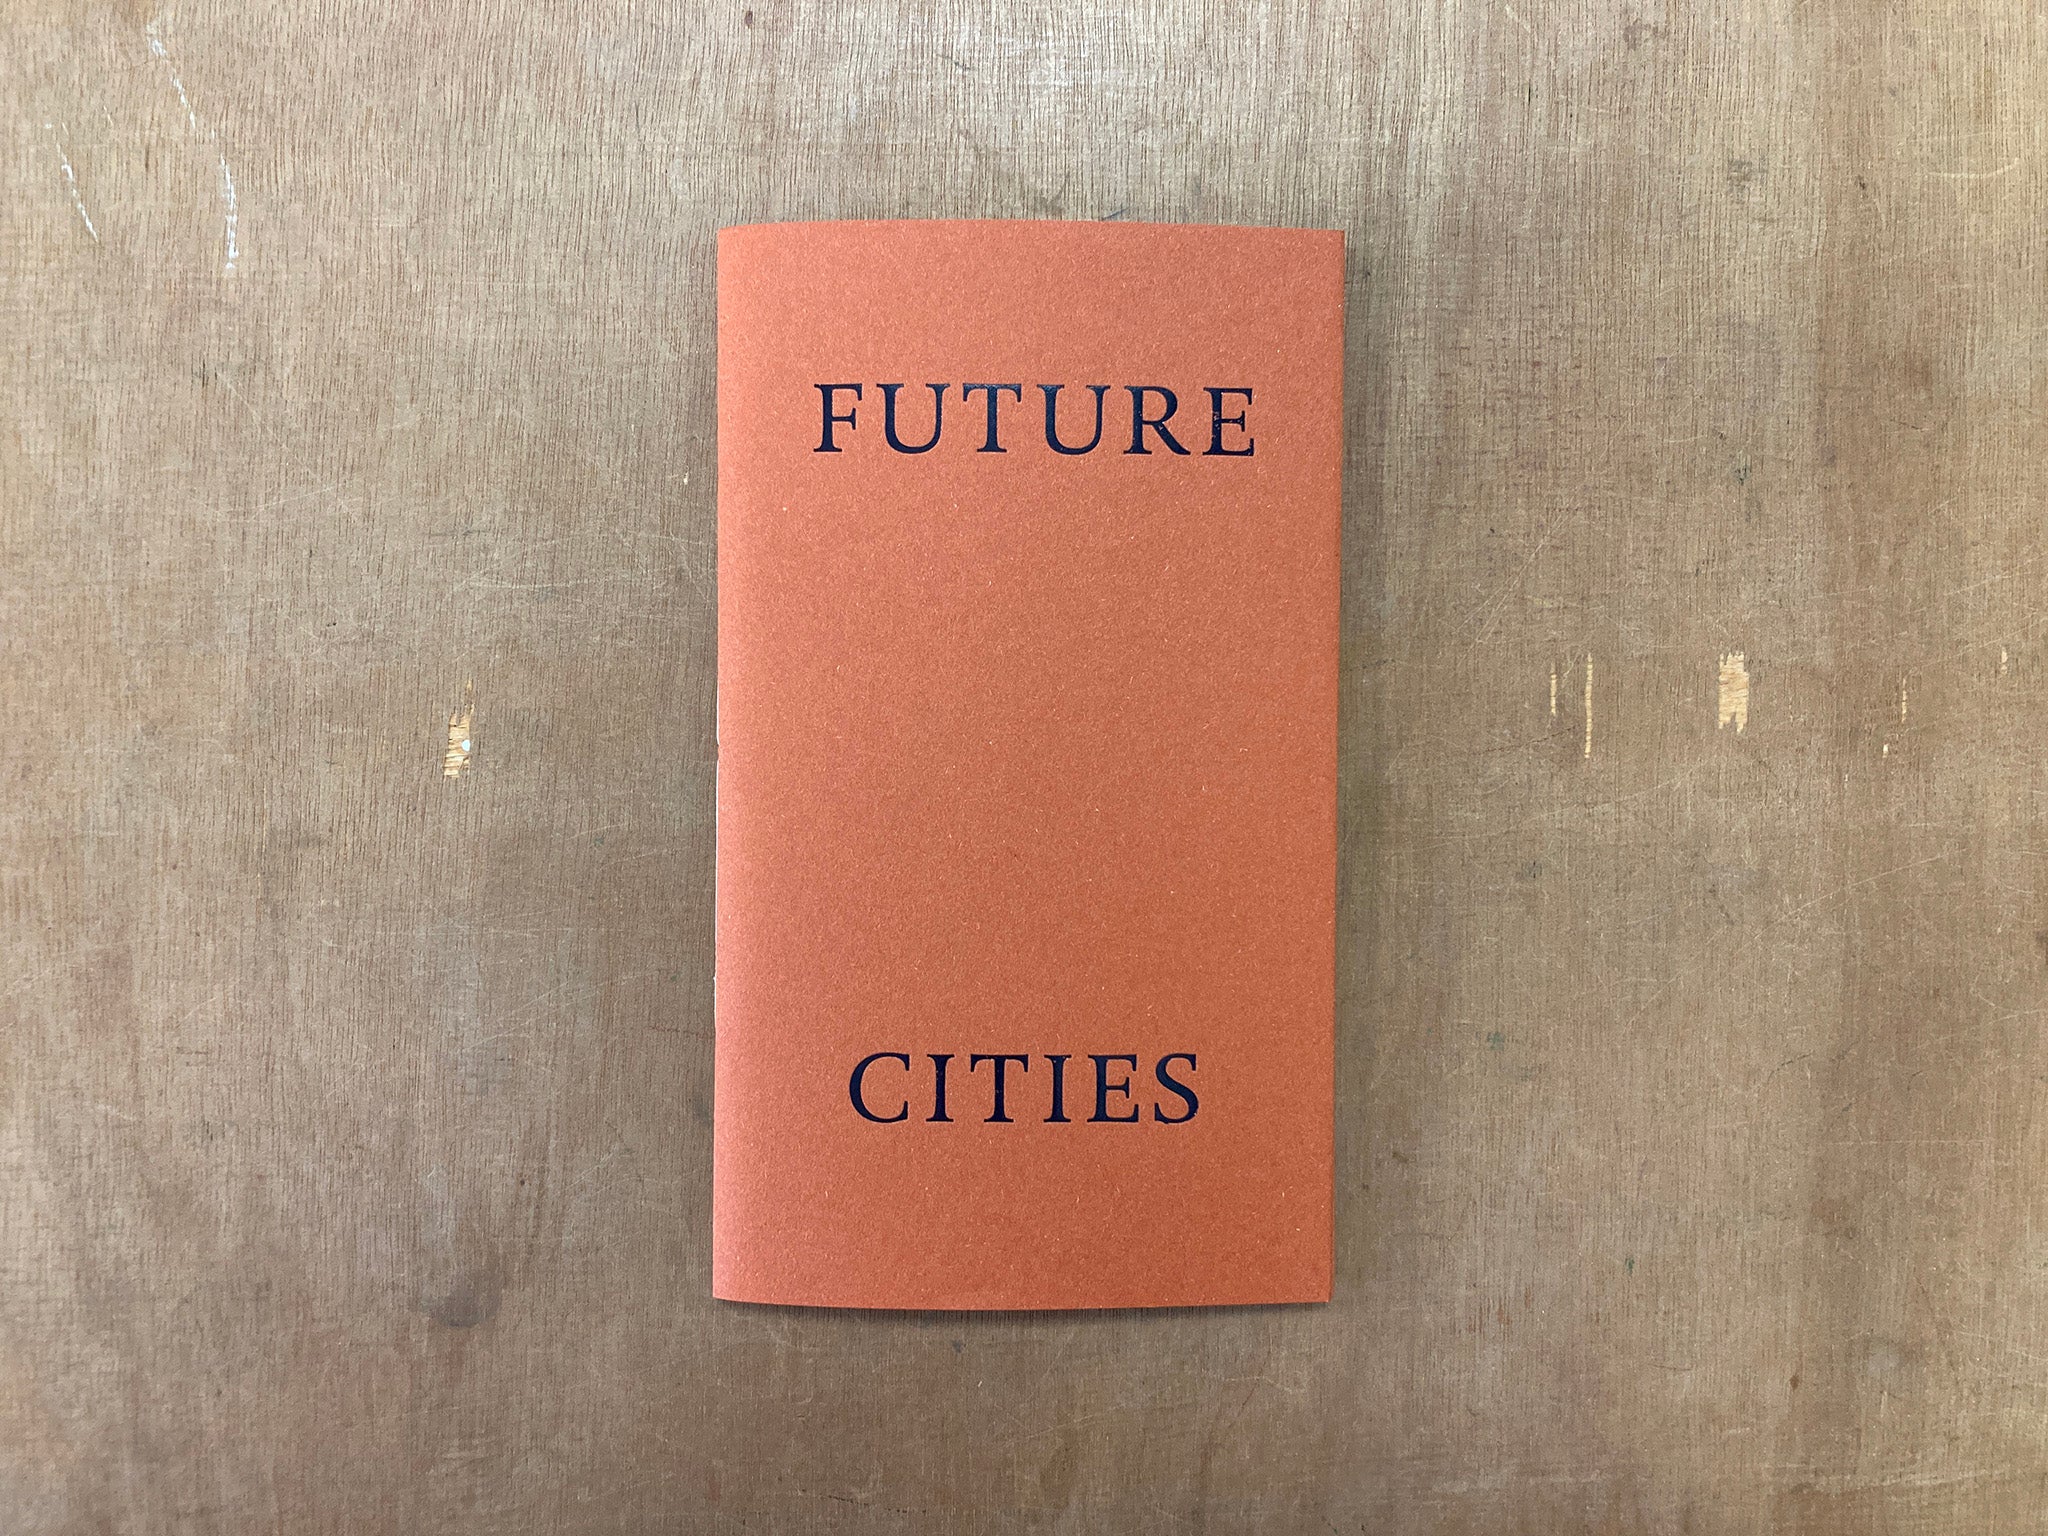 FUTURE CITIES by Graham Gussin, Janice Kerbel, Selina Nwulu, Alek O., Astra Papachristodoulou, Prem Sahib, Aea Varfis-van Warmelo and James Wilkes